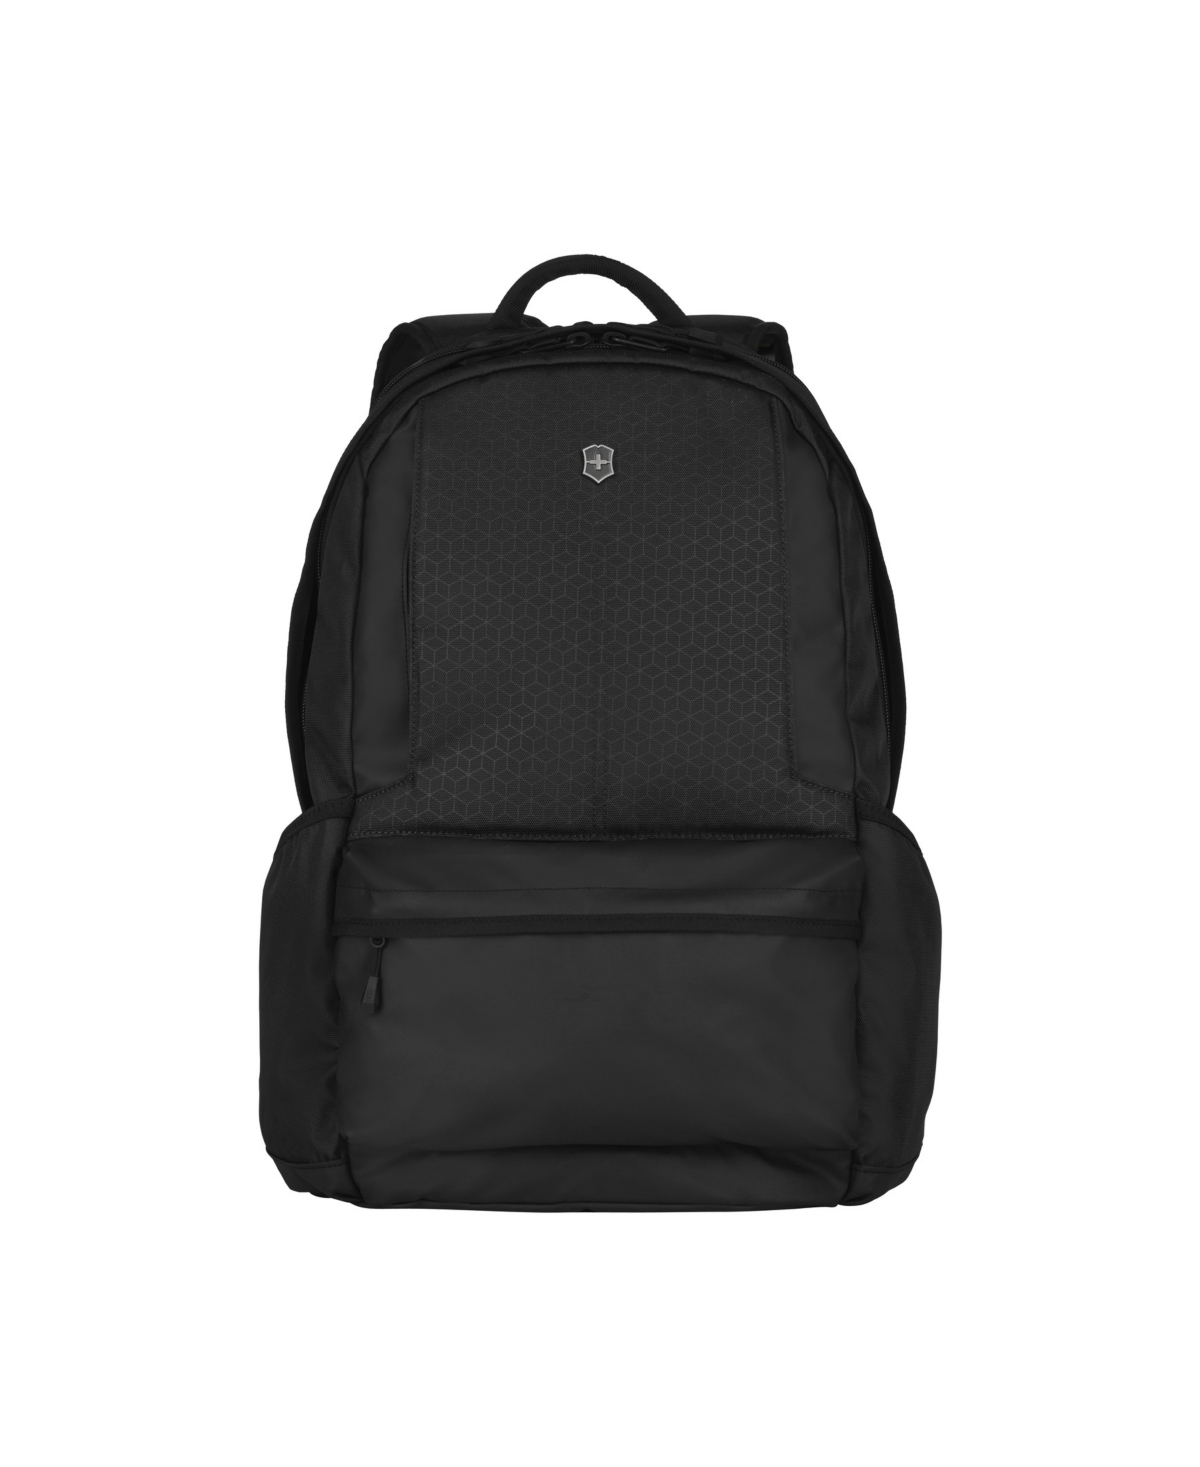 Victorinox Altmont Original Laptop Backpack In Black